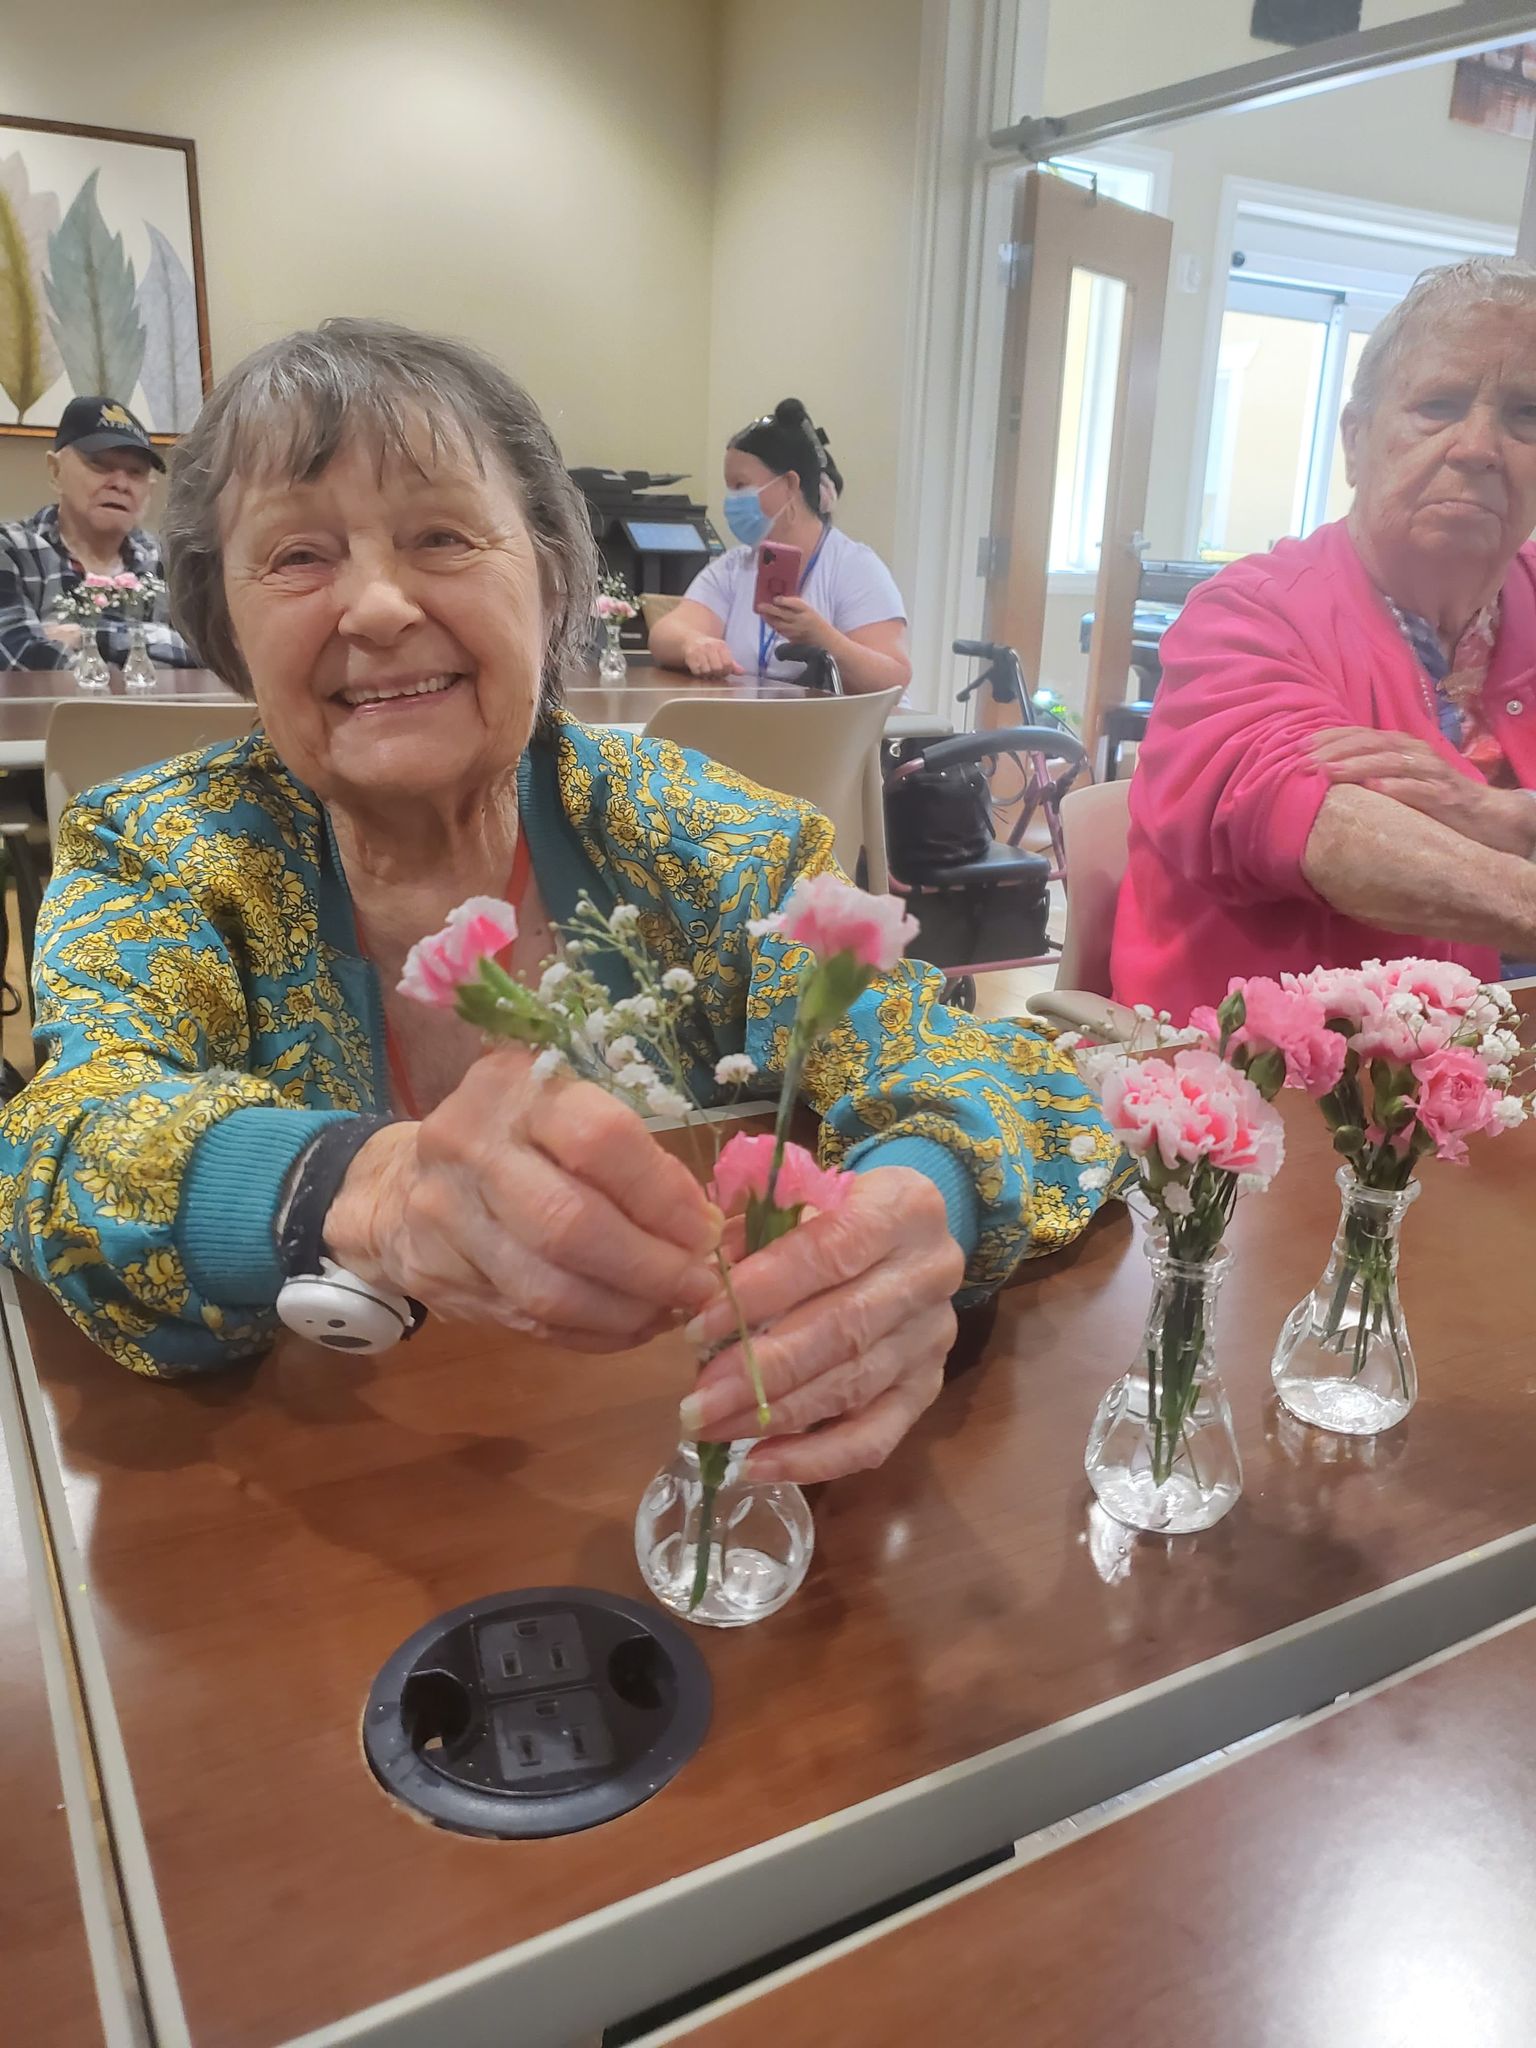 memory care activity - arranging flowers - Dorothy arranging flowers